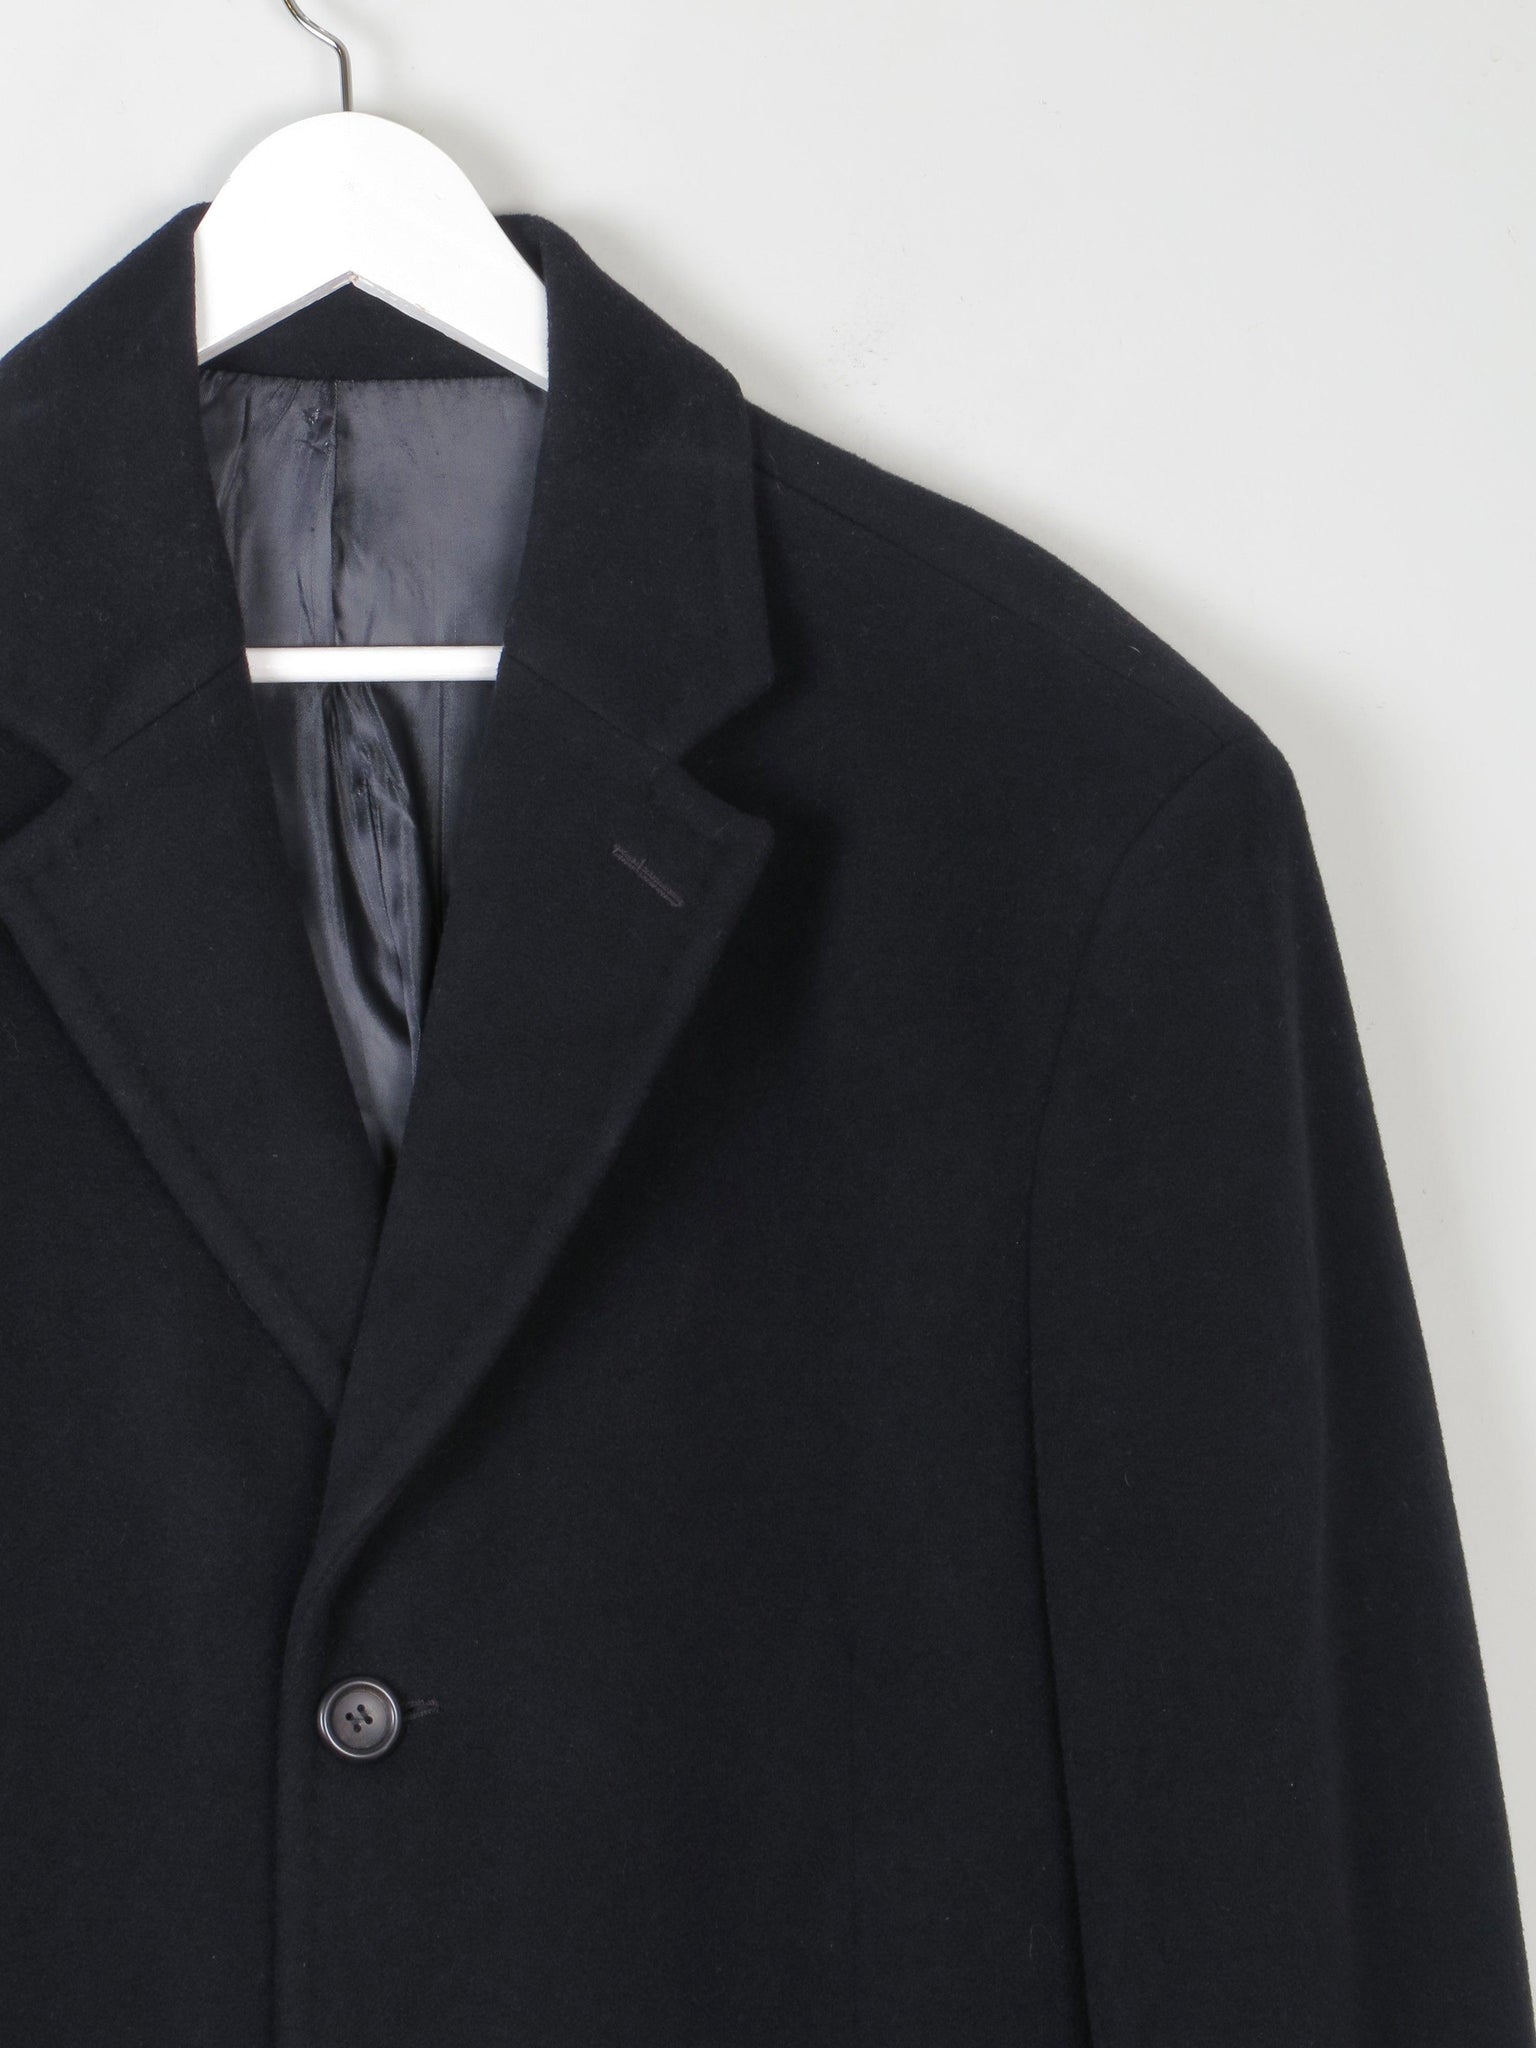 Men's Black Wool Nicole Farhi Cashmere Coat L/XL 46" Approx - The Harlequin